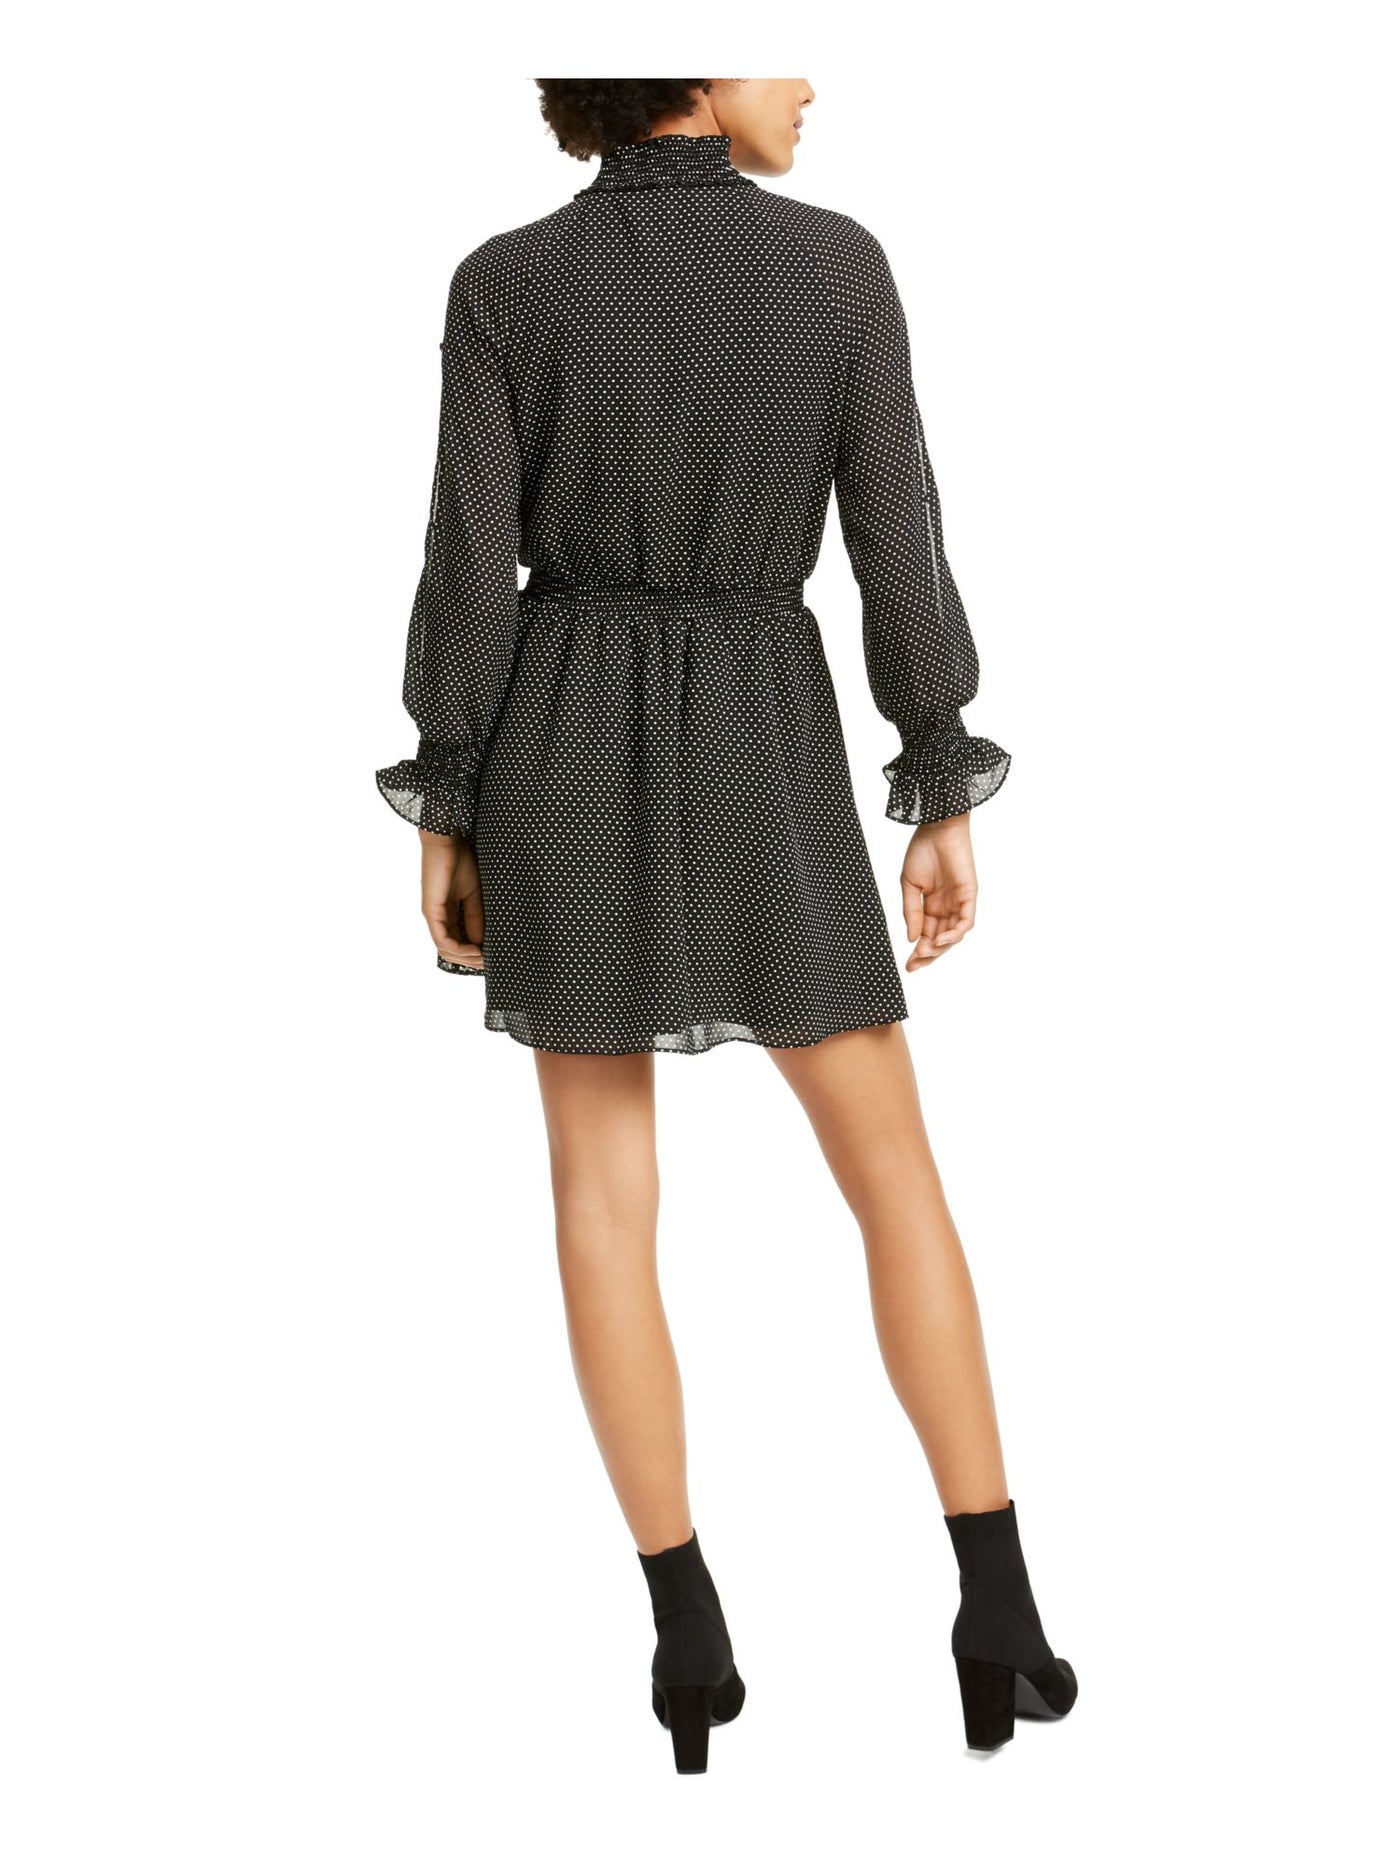 RACHEL ROY Womens Black Polka Dot Long Sleeve Keyhole Short Fit + Flare Dress M